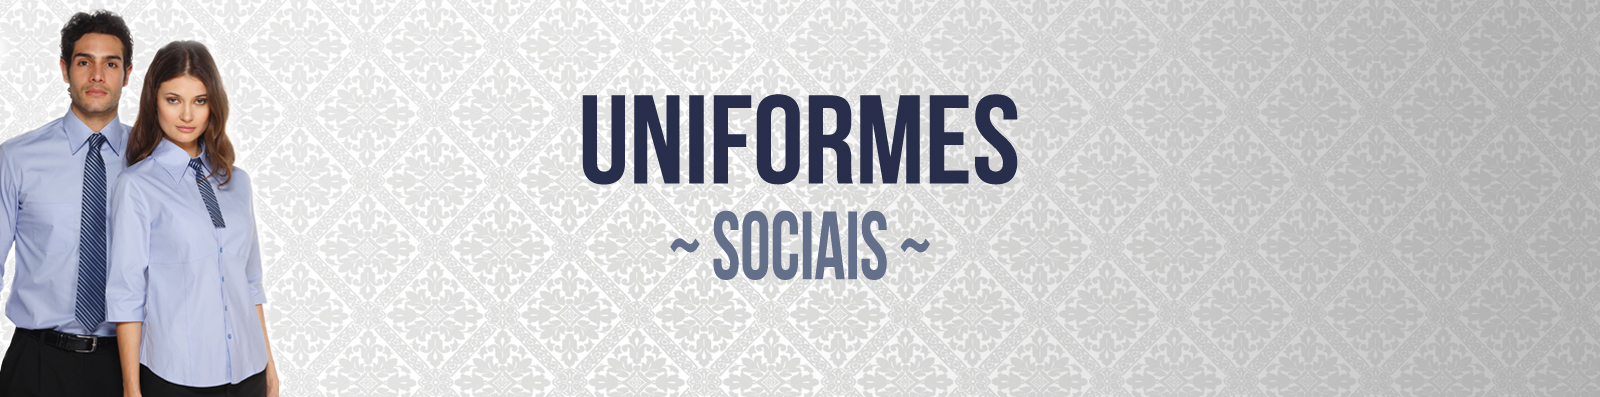 Uniformes-Social-2-1600x397px